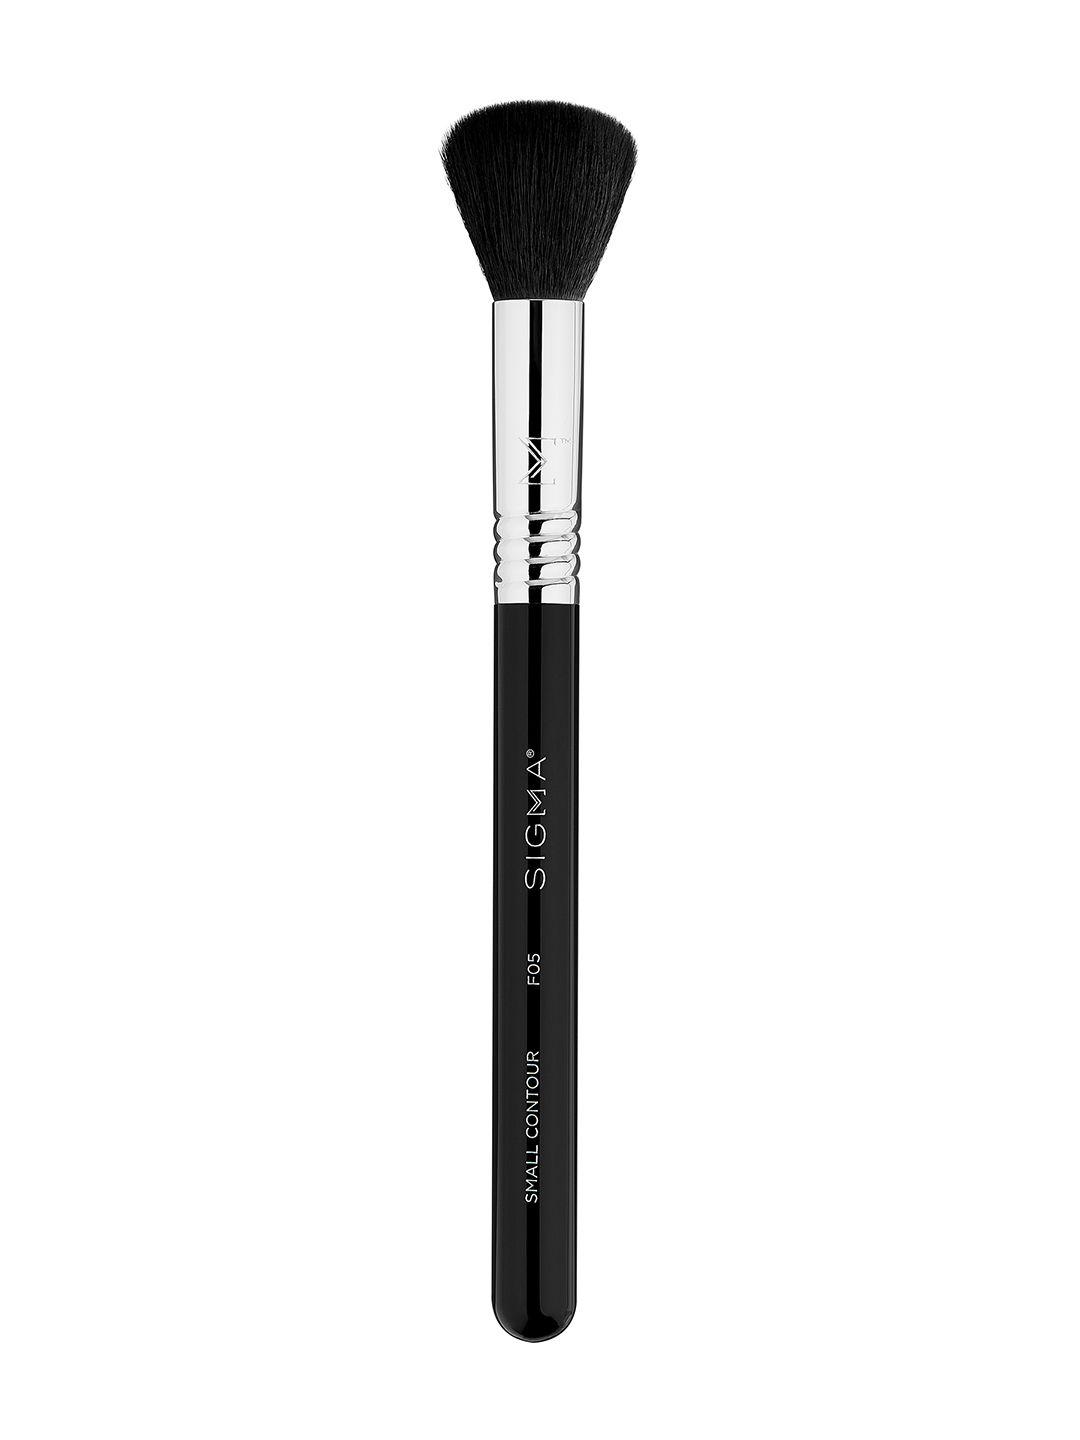 sigma beauty small contour brush f05 - black